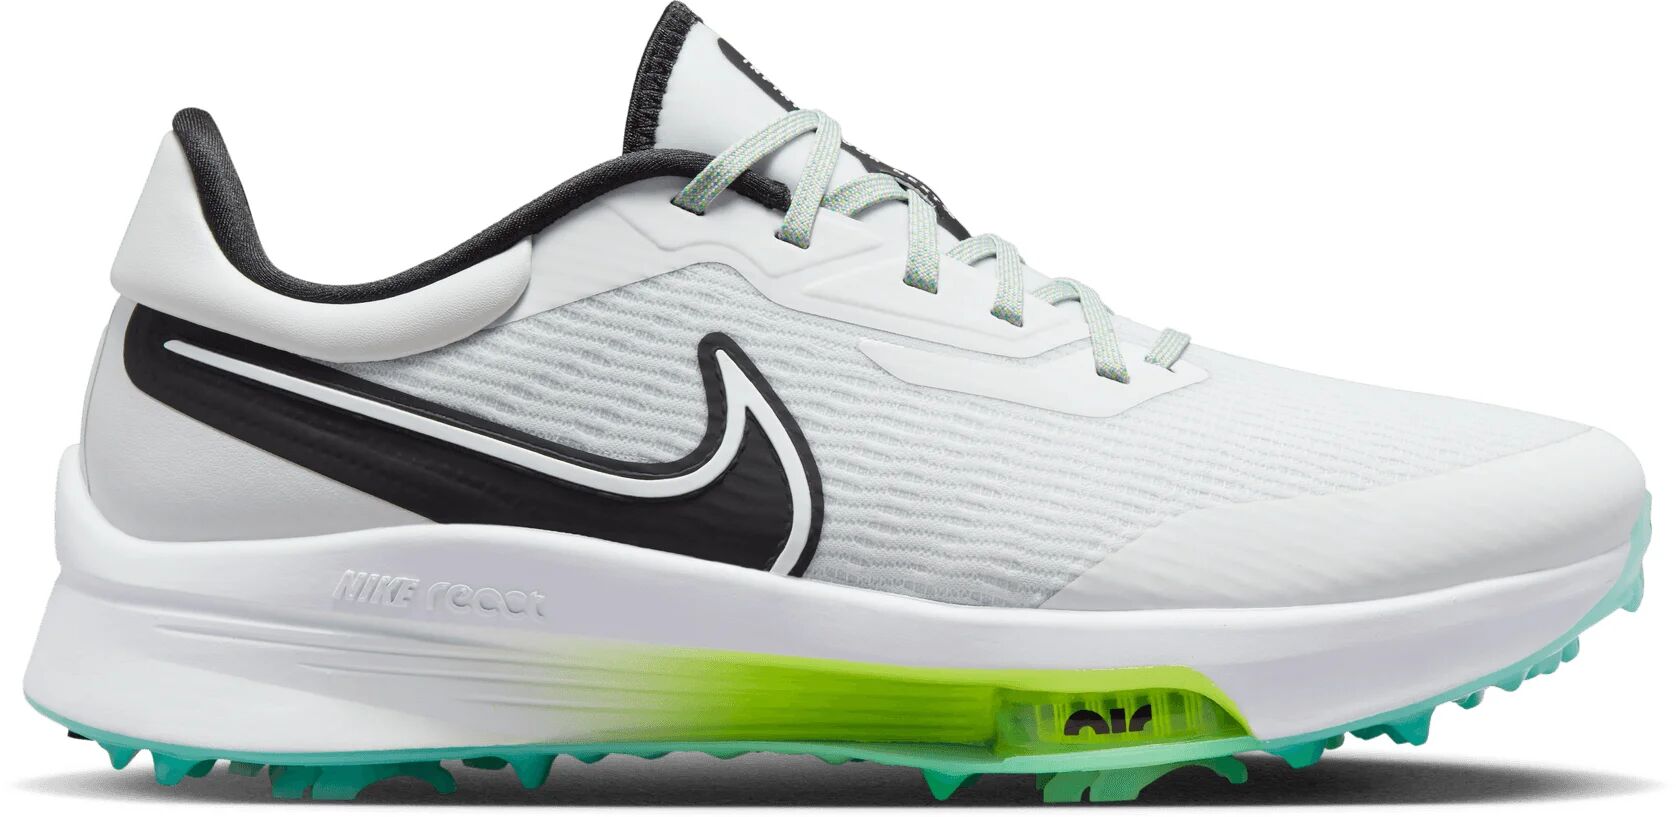 Nike Air Zoom Infinity Tour NEXT% Golf Shoes - Photon Dust/Volt/Emerald Rise/Black - 9.5 - MEDIUM